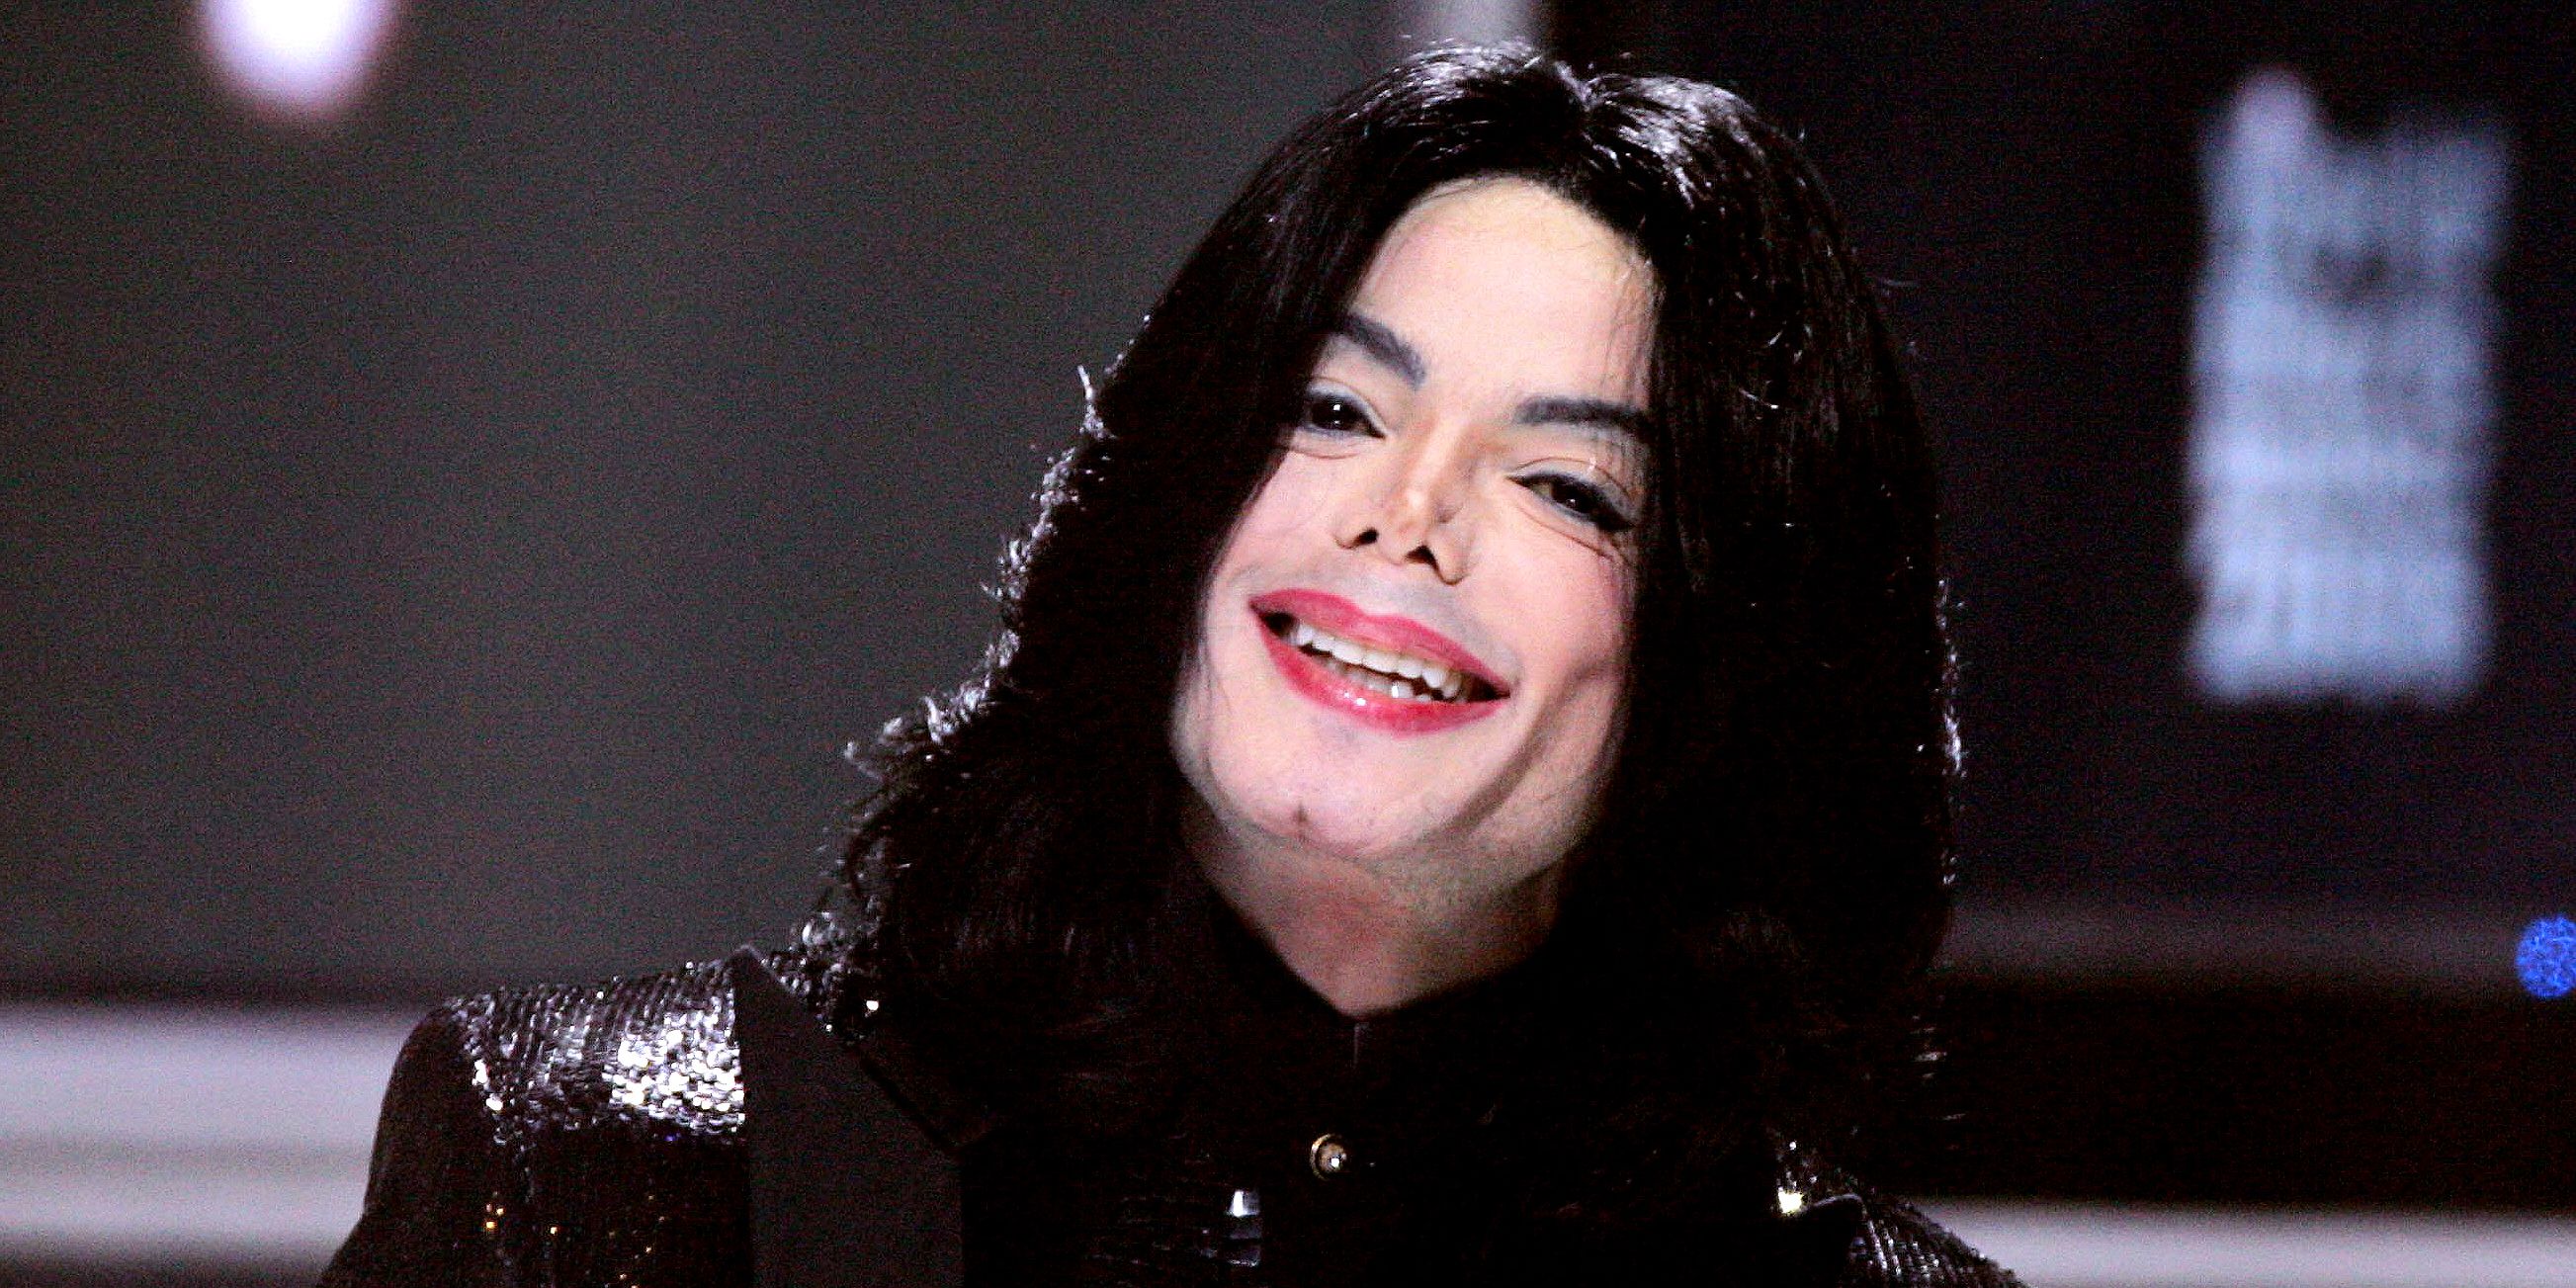 ÎÏÎ¿ÏÎ­Î»ÎµÏÎ¼Î± ÎµÎ¹ÎºÏÎ½Î±Ï Î³Î¹Î± Michael Jackson